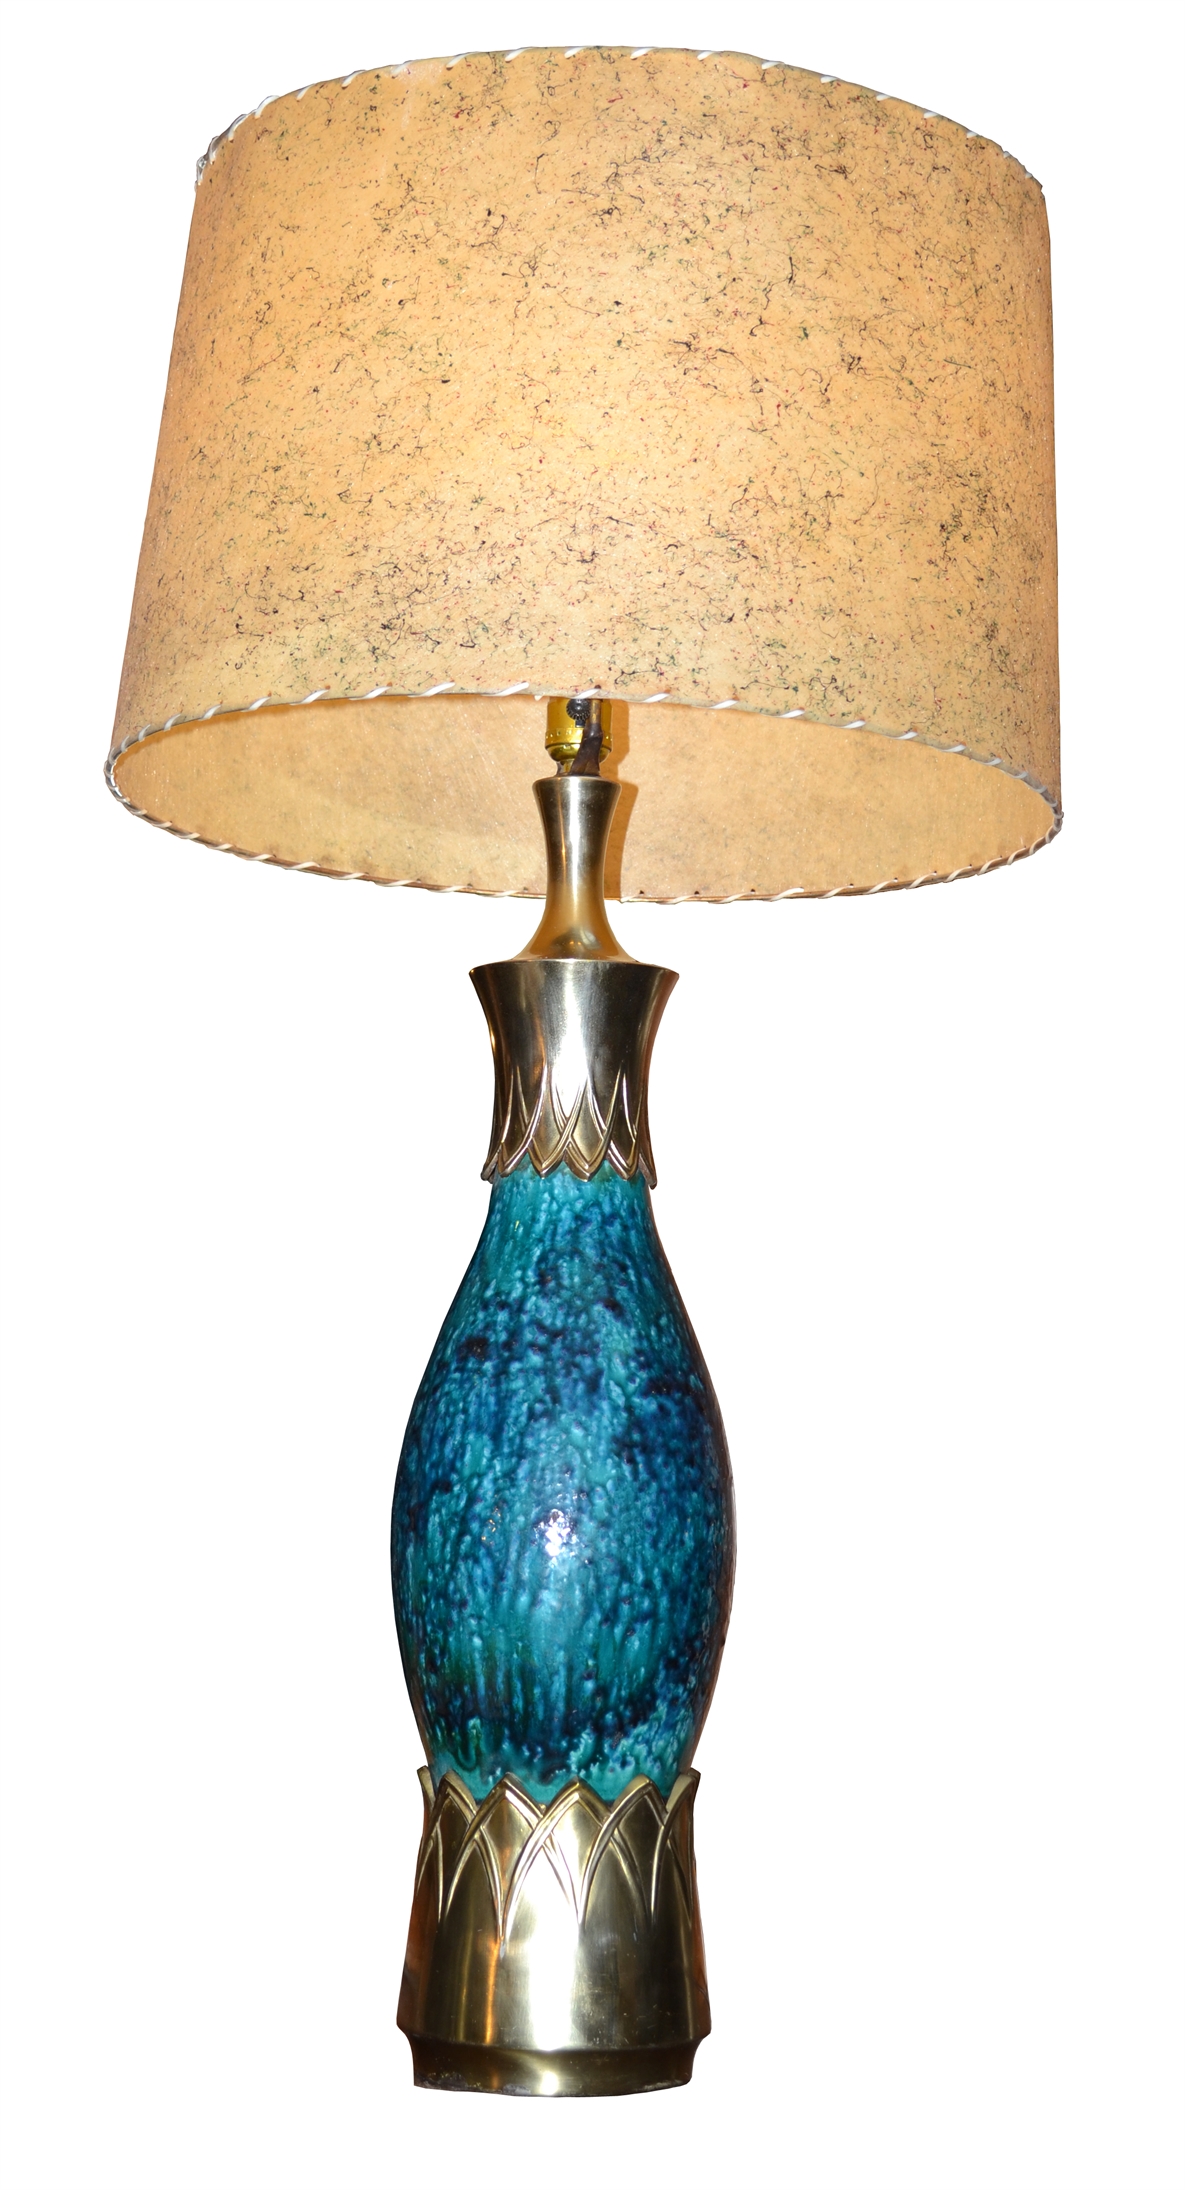 MB/3025 - Mid-century Blue/ Green Lamp